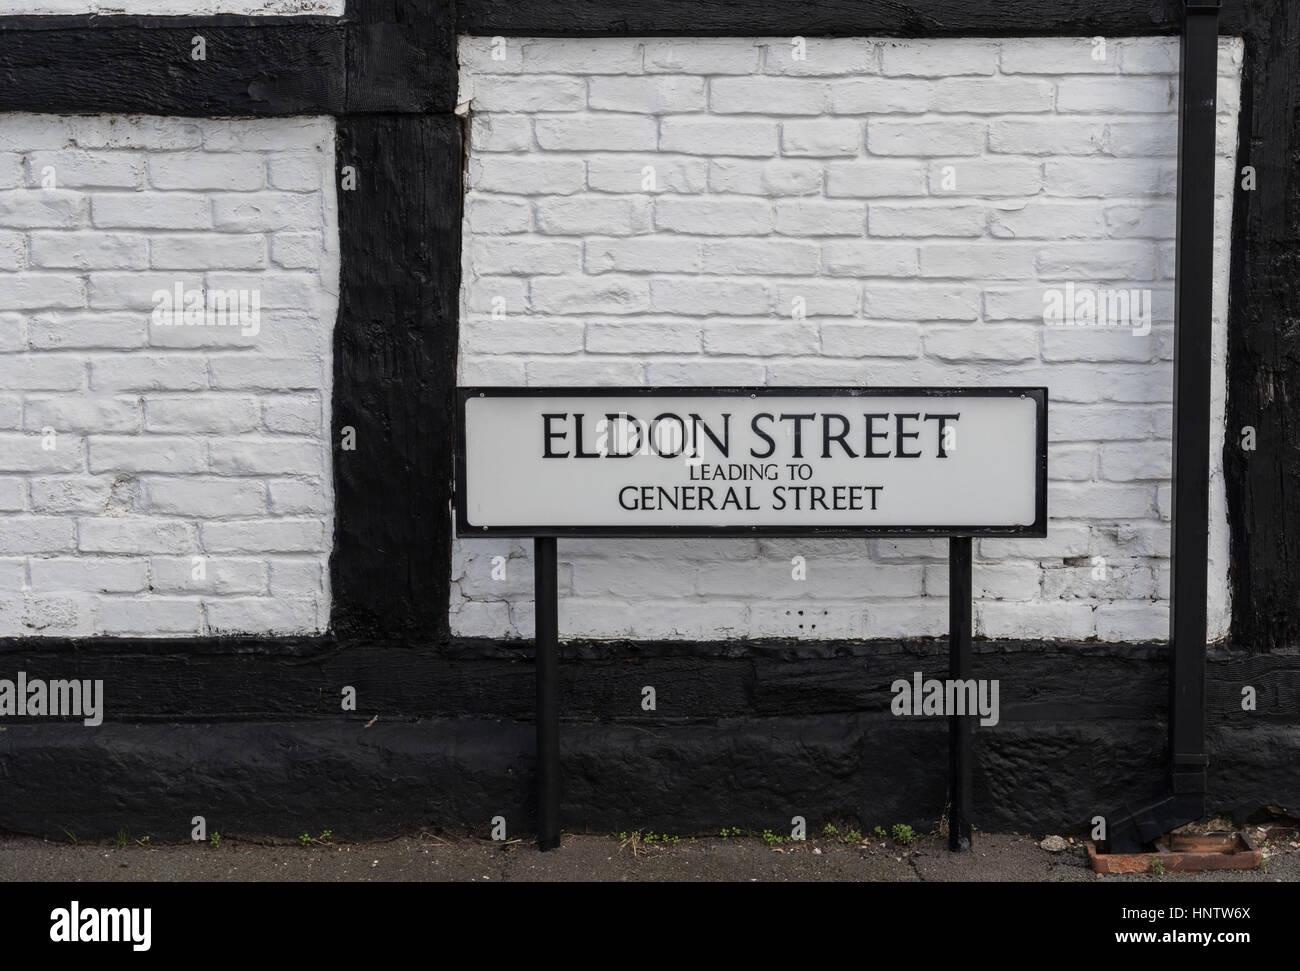 Eldon Street sign, Warrington, Cheshire, UK Stock Photo